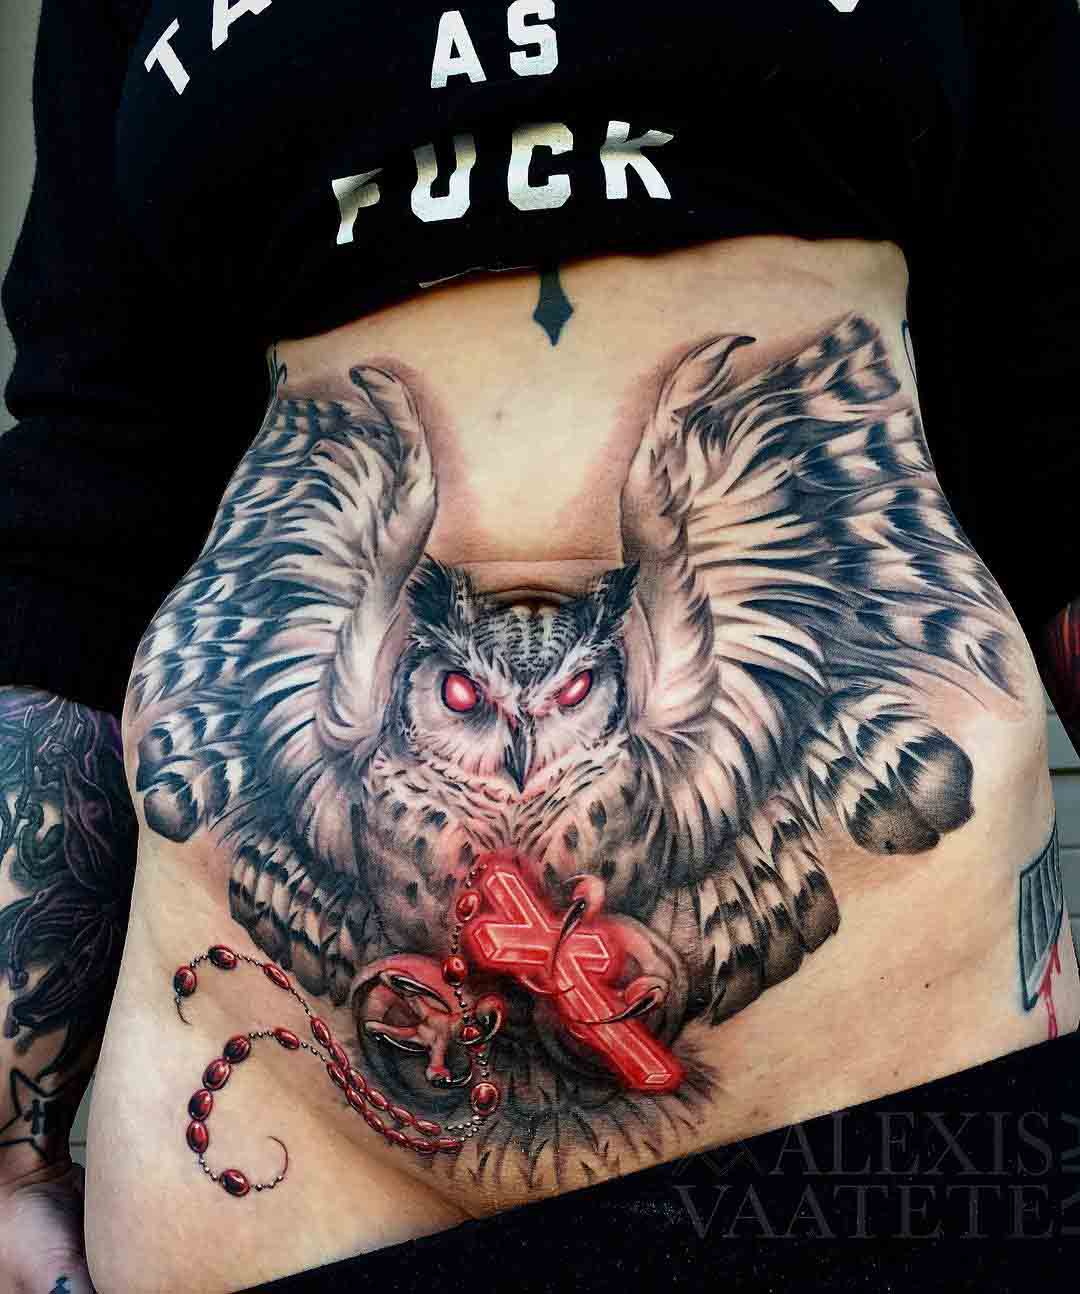 Owl Tattoo on Lower Belly - Best Tattoo Ideas Gallery